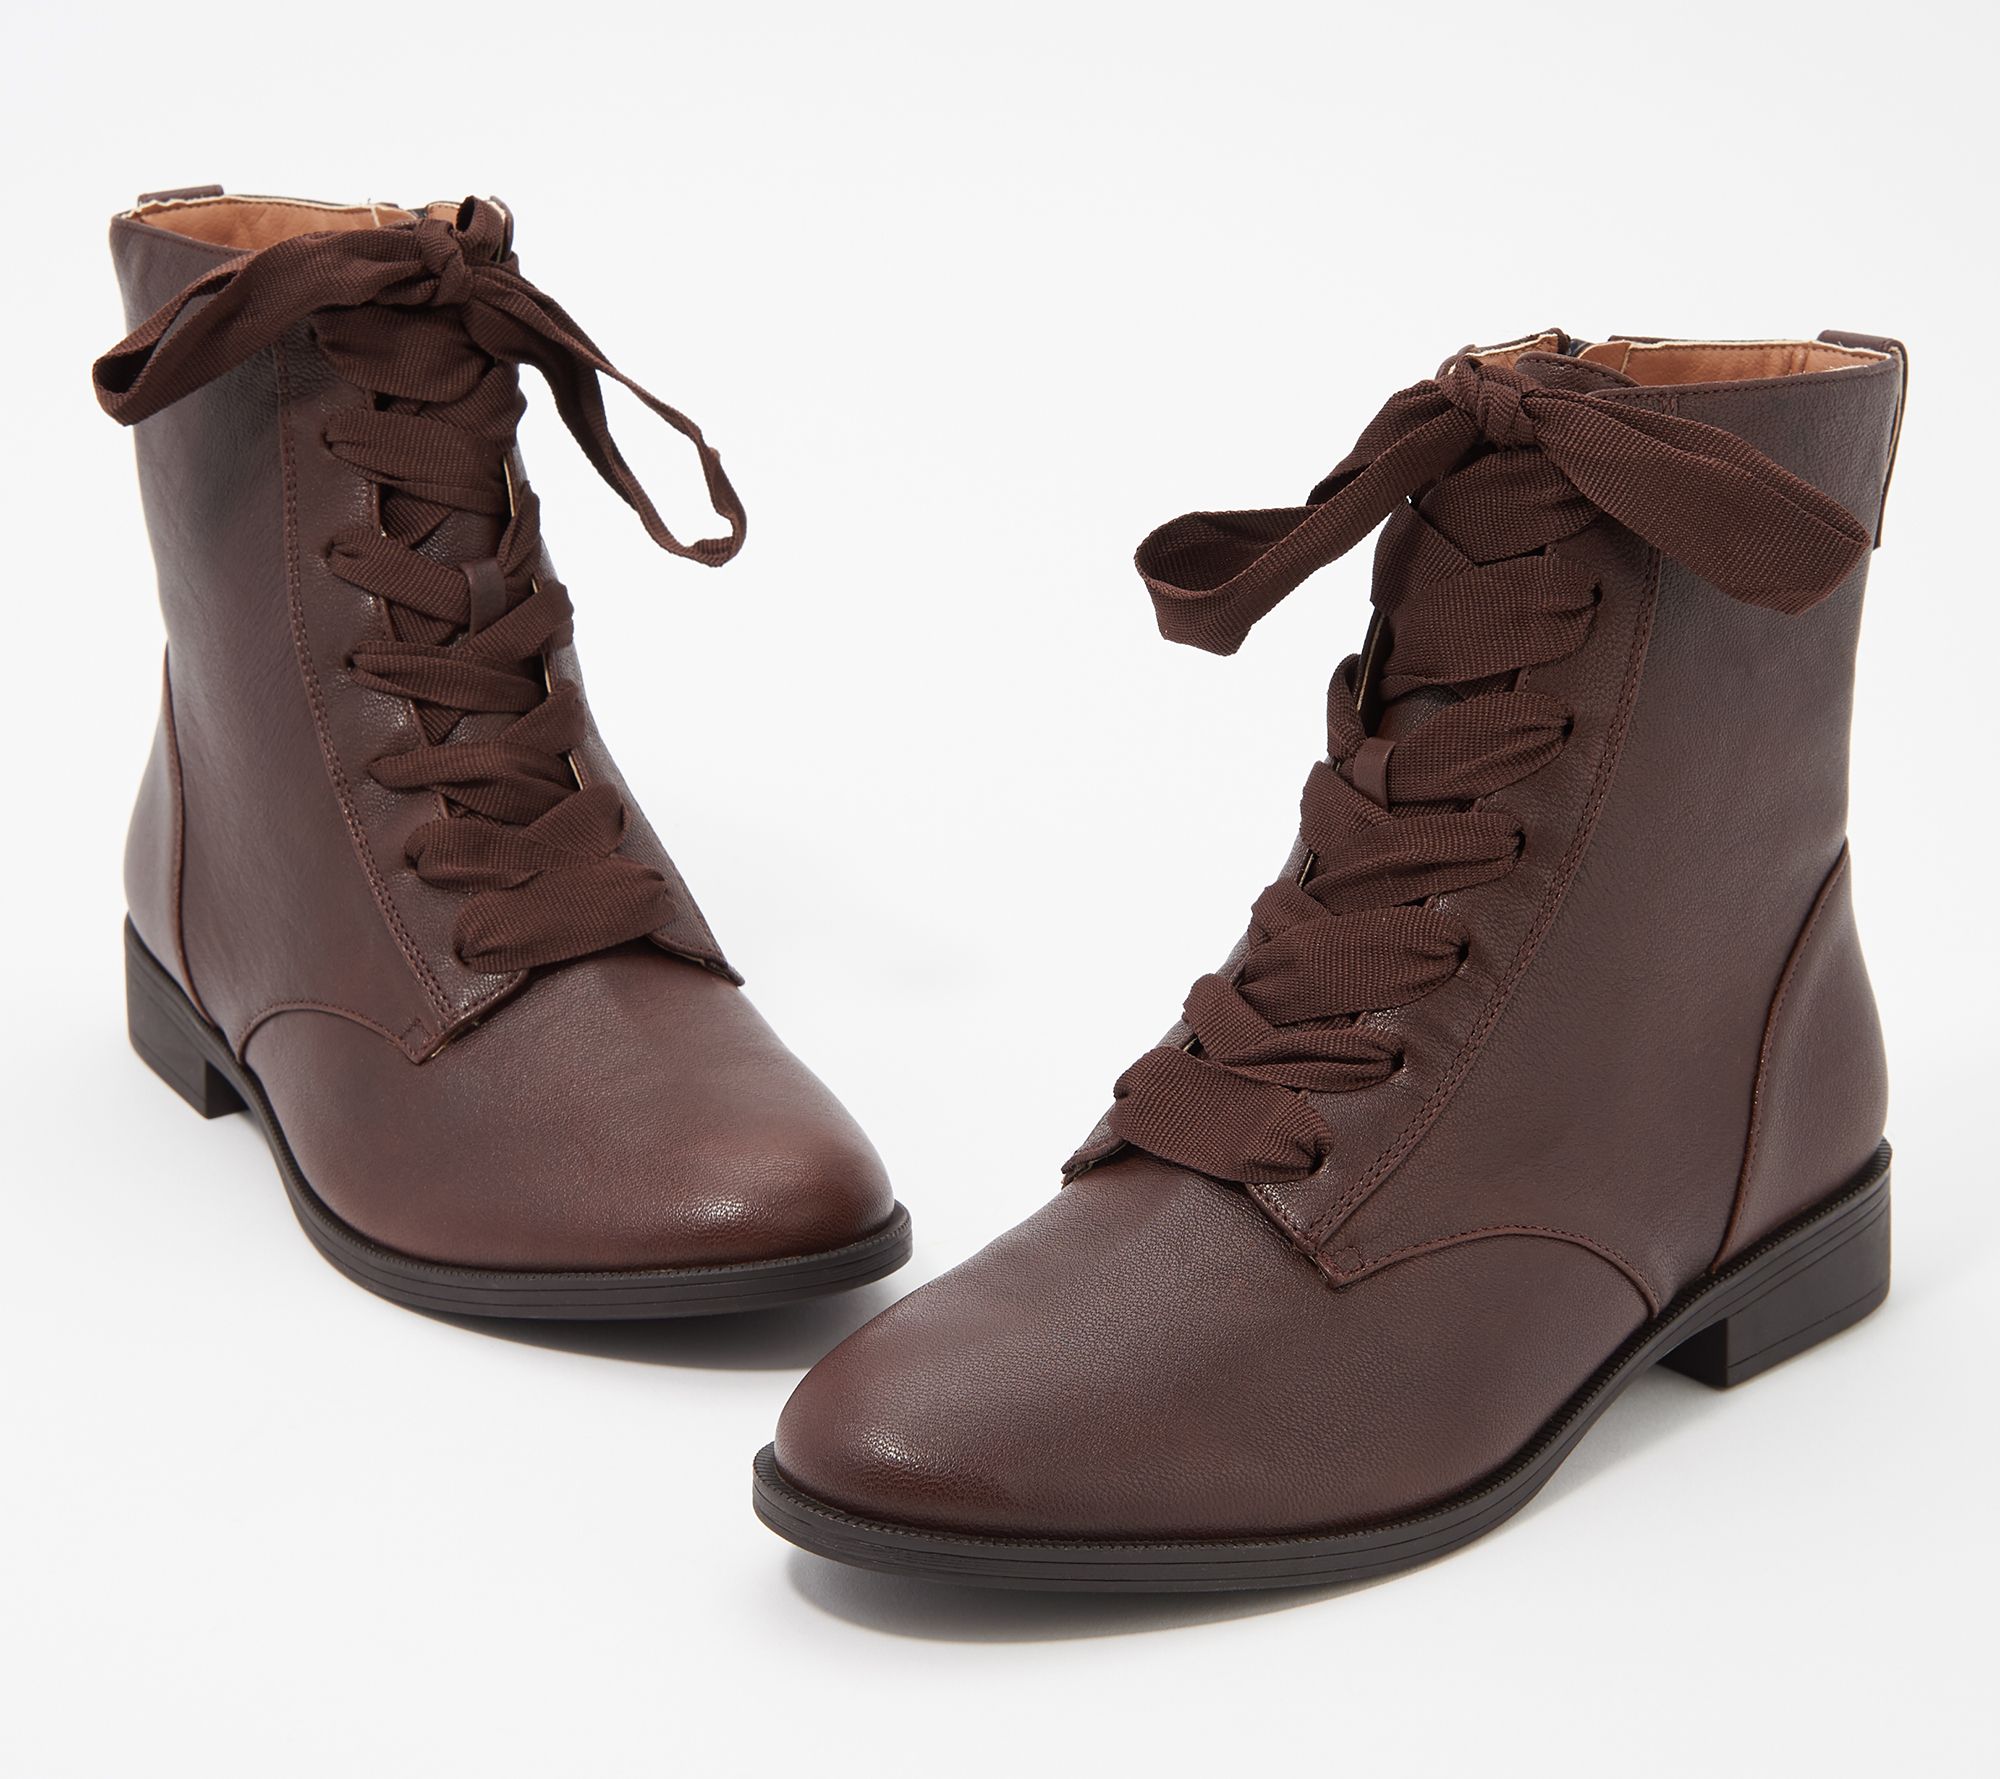 vionic boots on sale